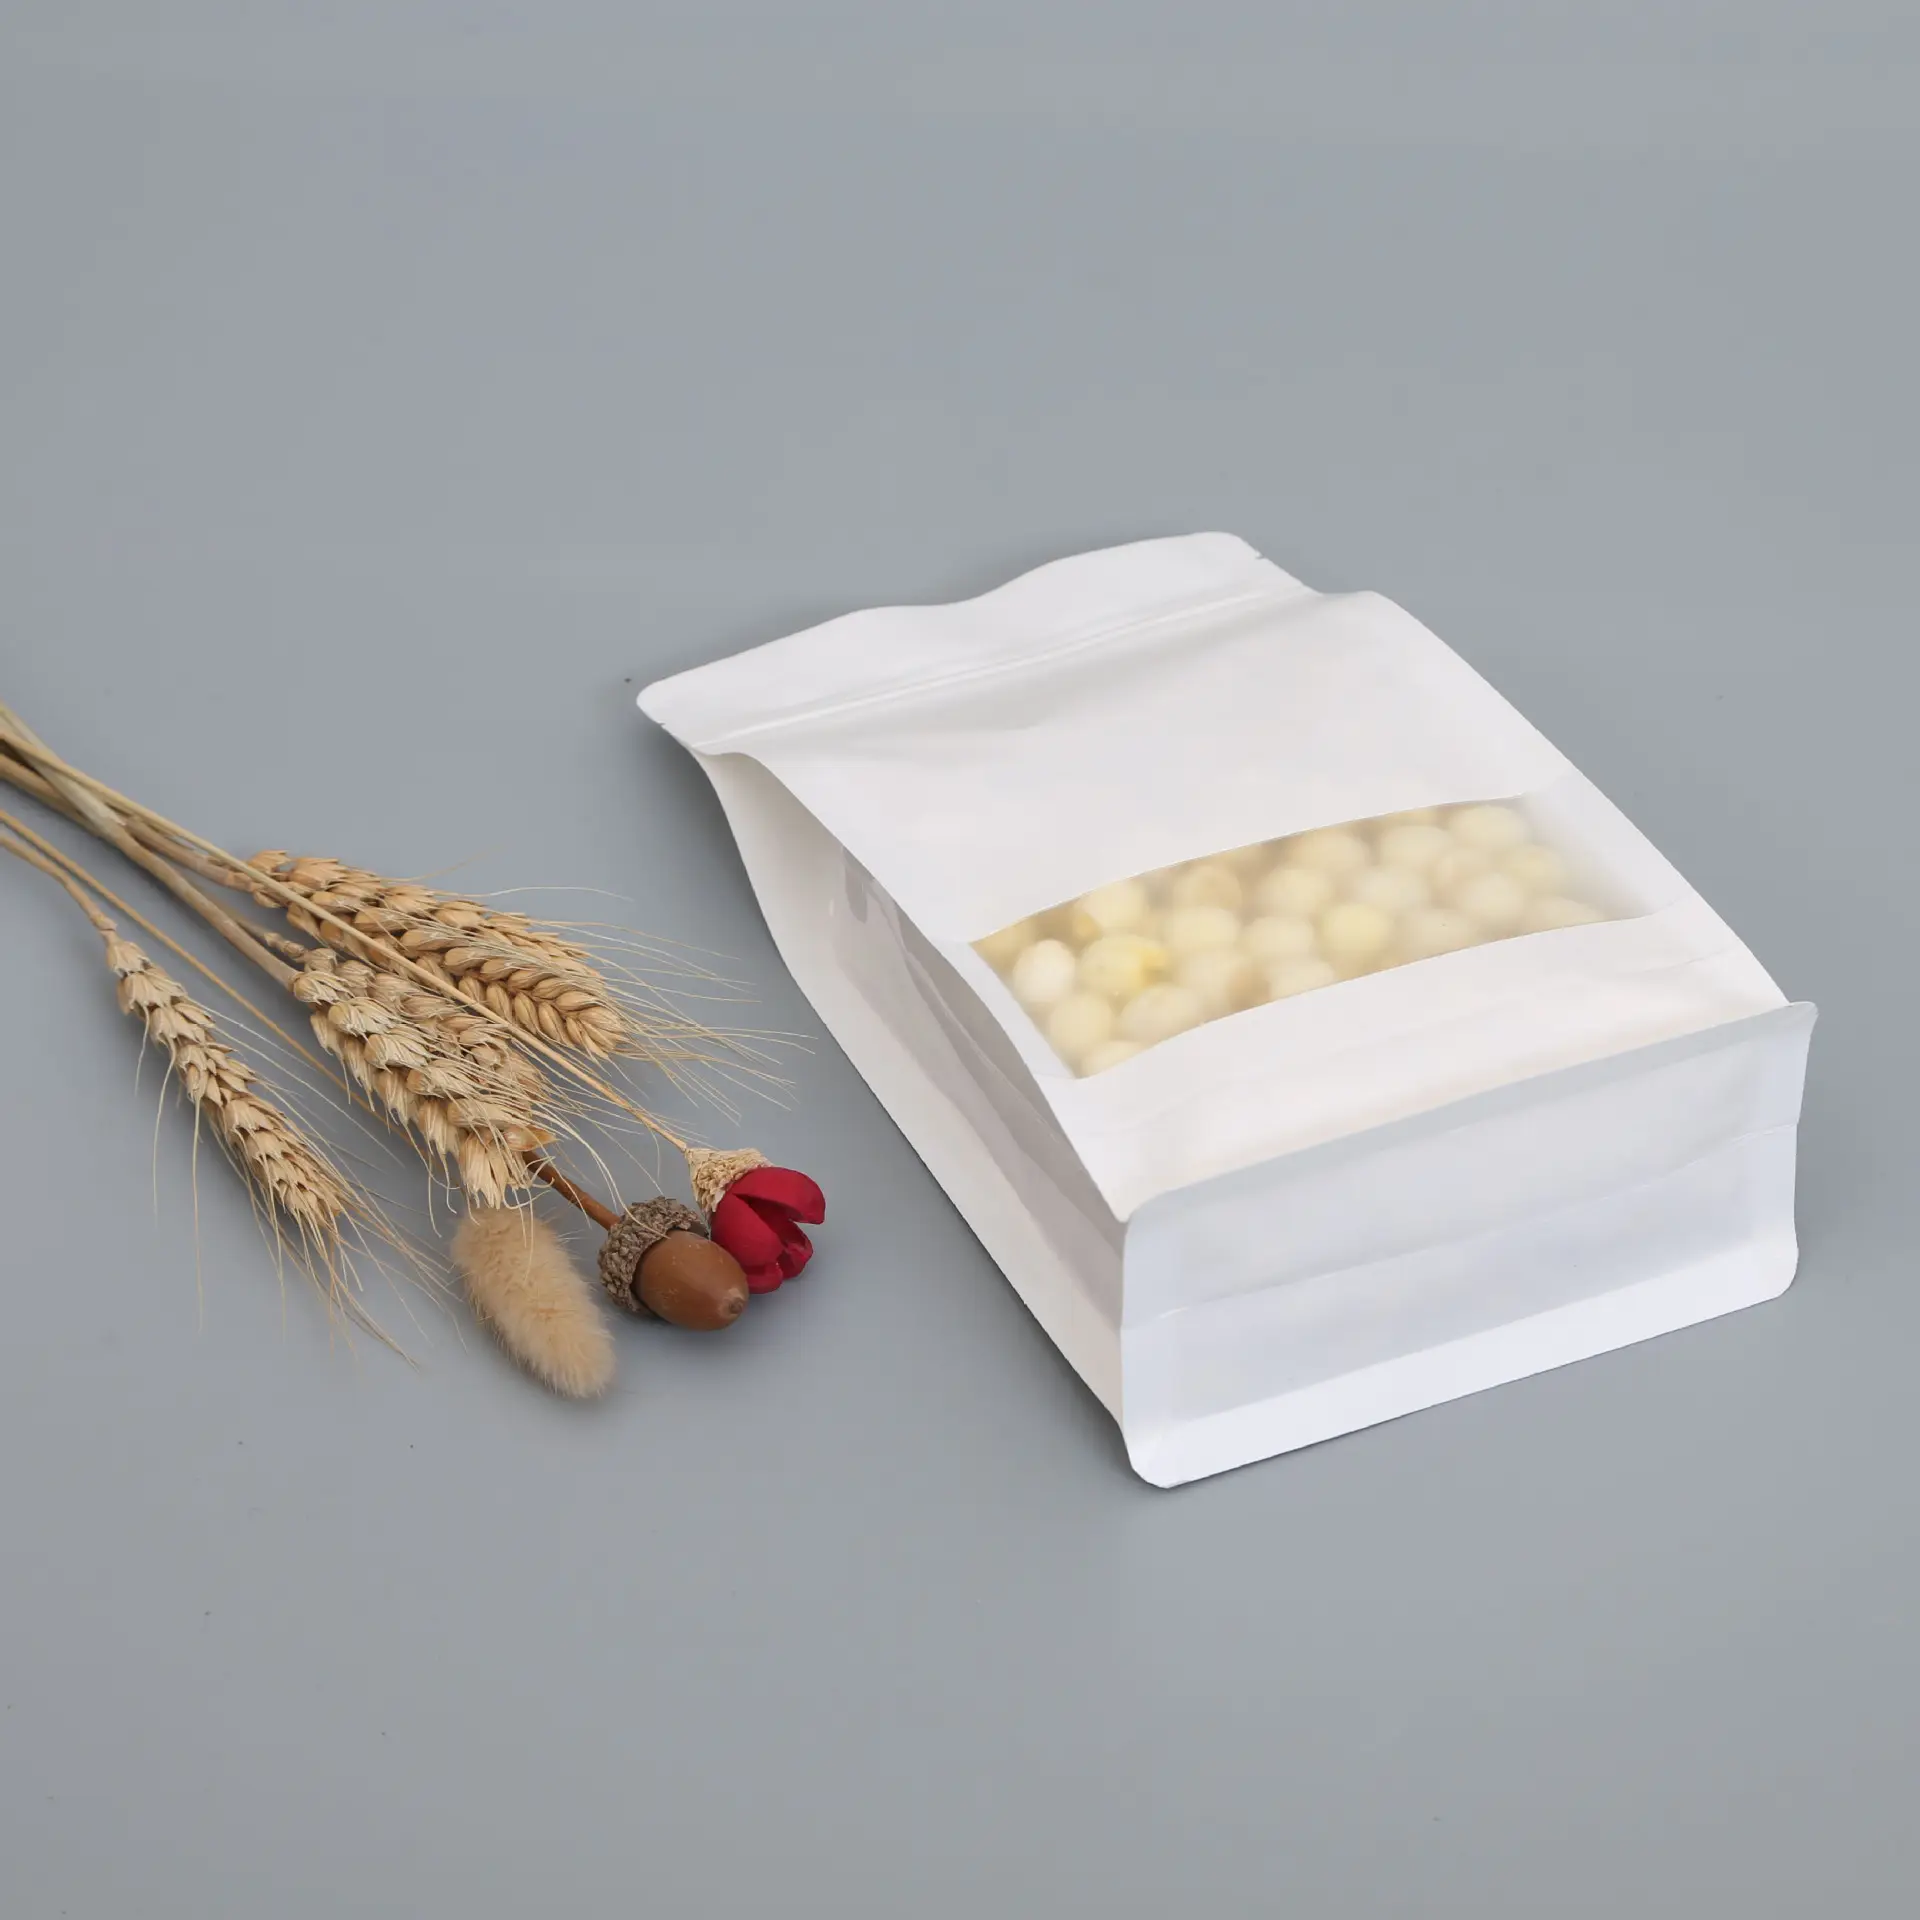 Bolsas de embalaje de papel de almacenamiento de aperitivos desechables degradables de alta calidad a precio de fábrica personalizadas biodegradables para alimentos